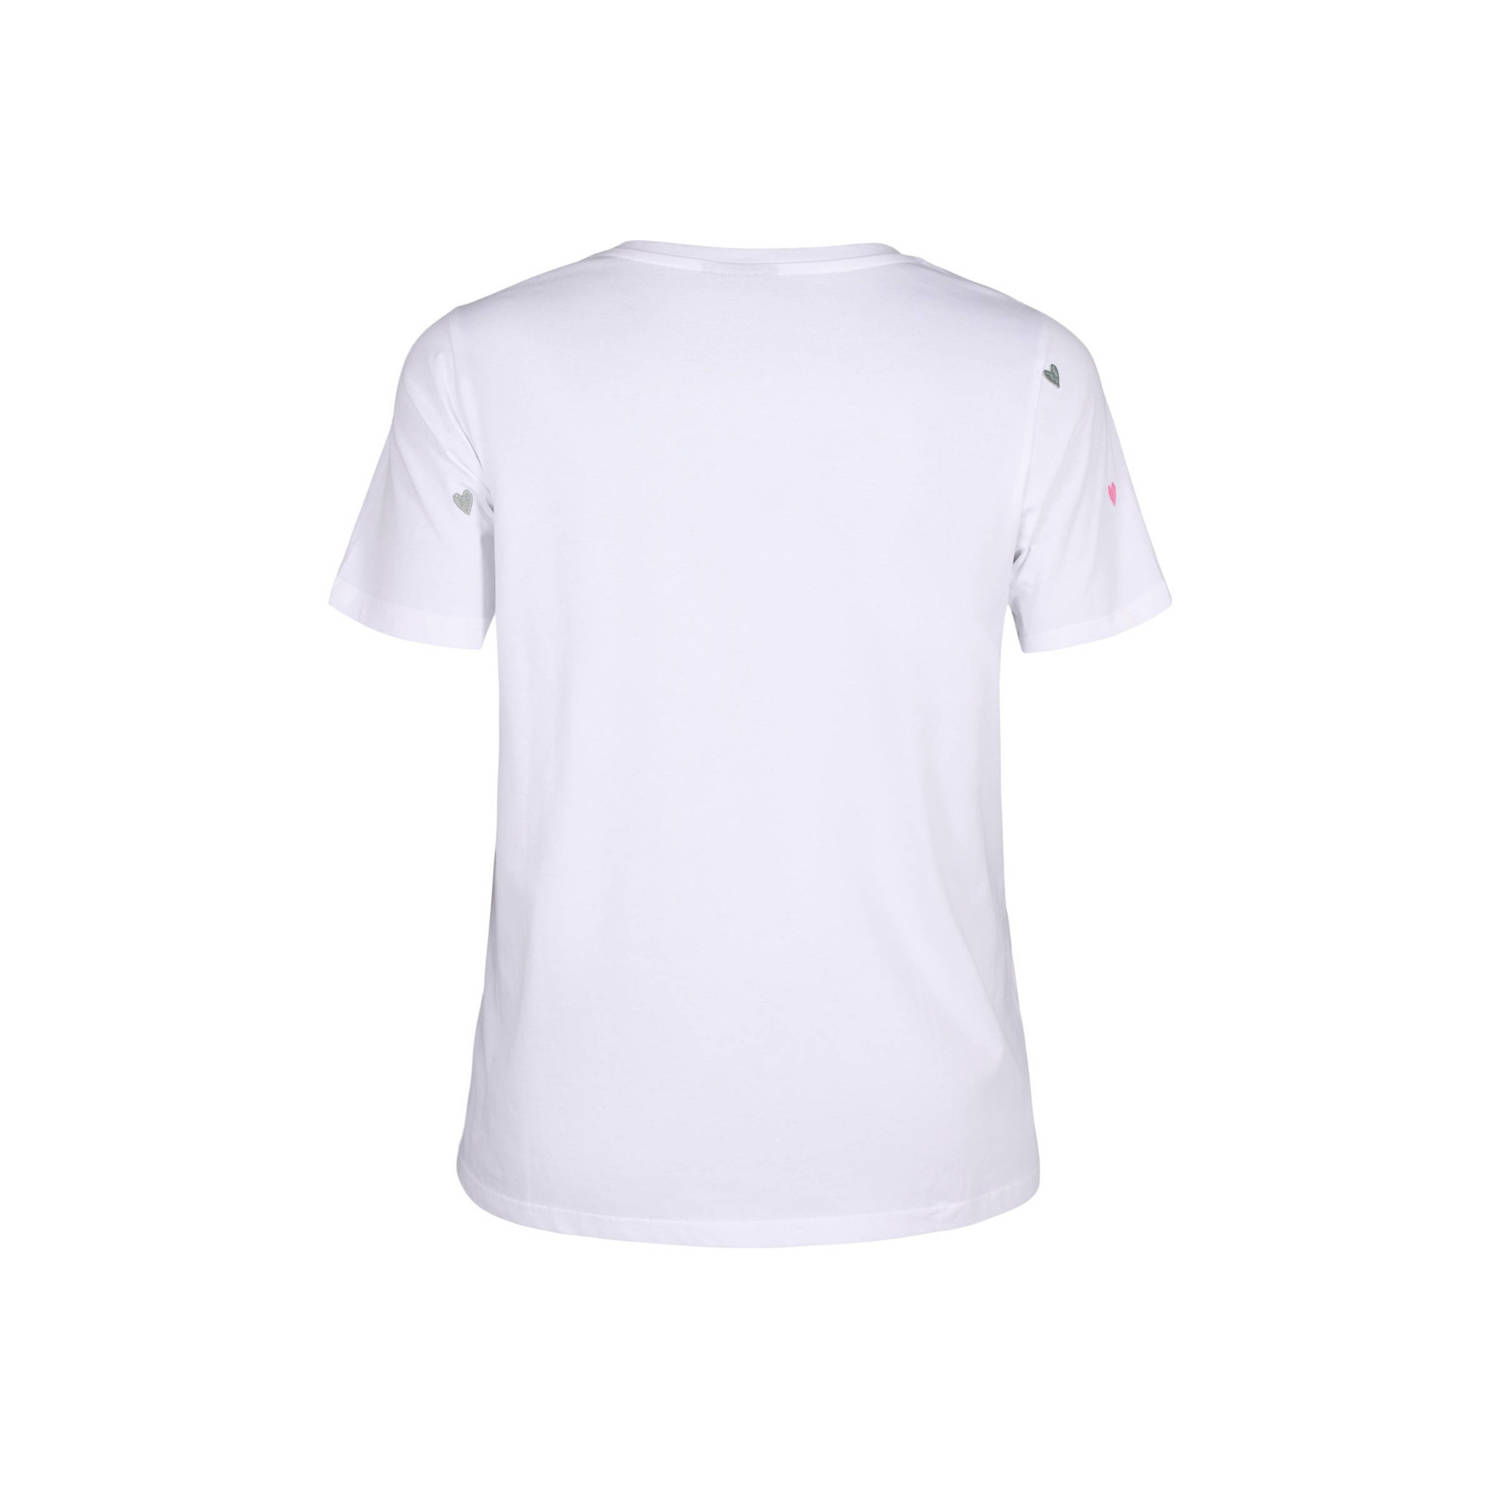 Zizzi T-shirt met hartjes en borduursels wit